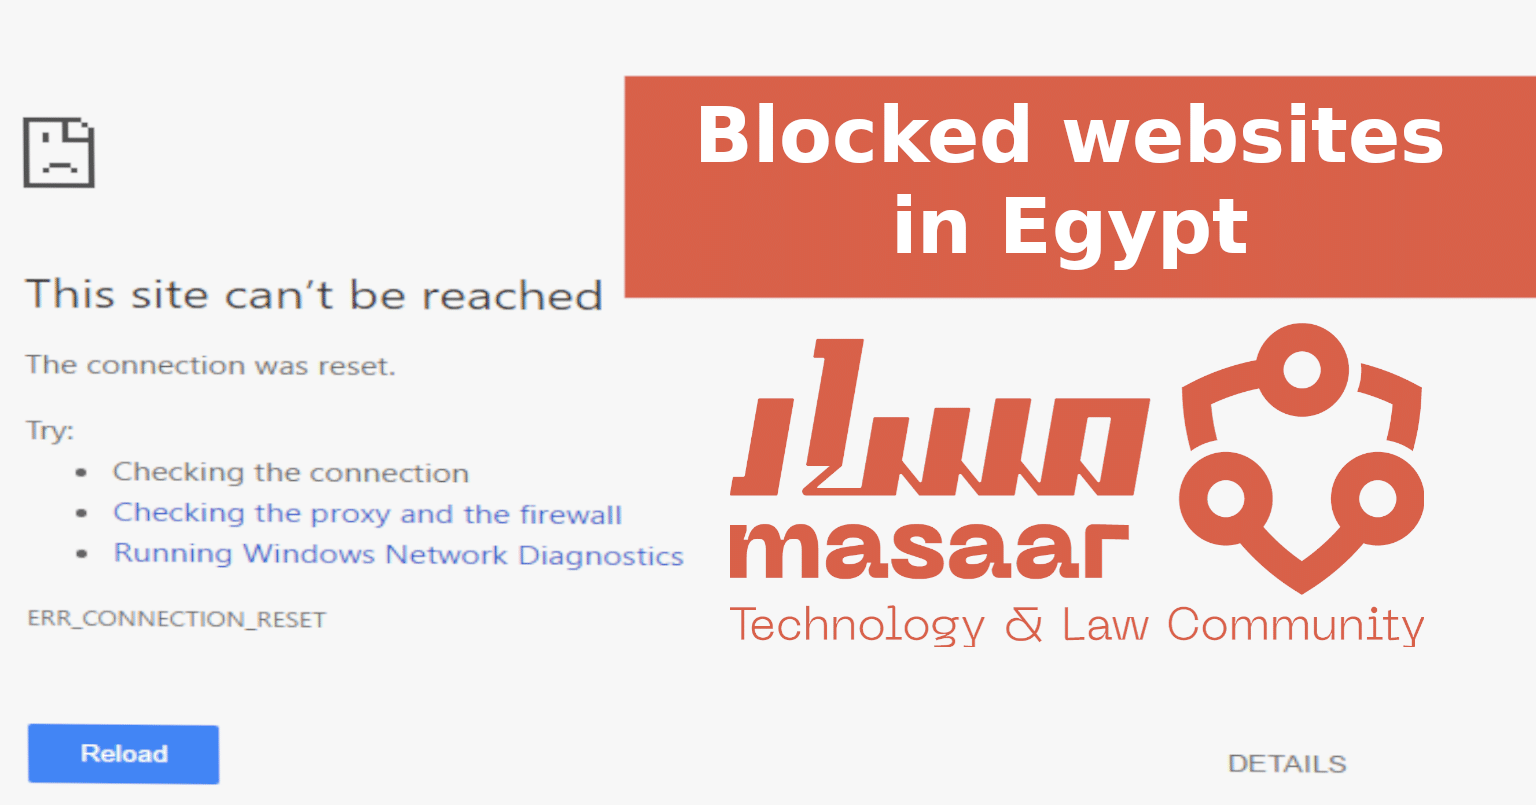 1536px x 805px - Blocked websites in Egypt - Masaar